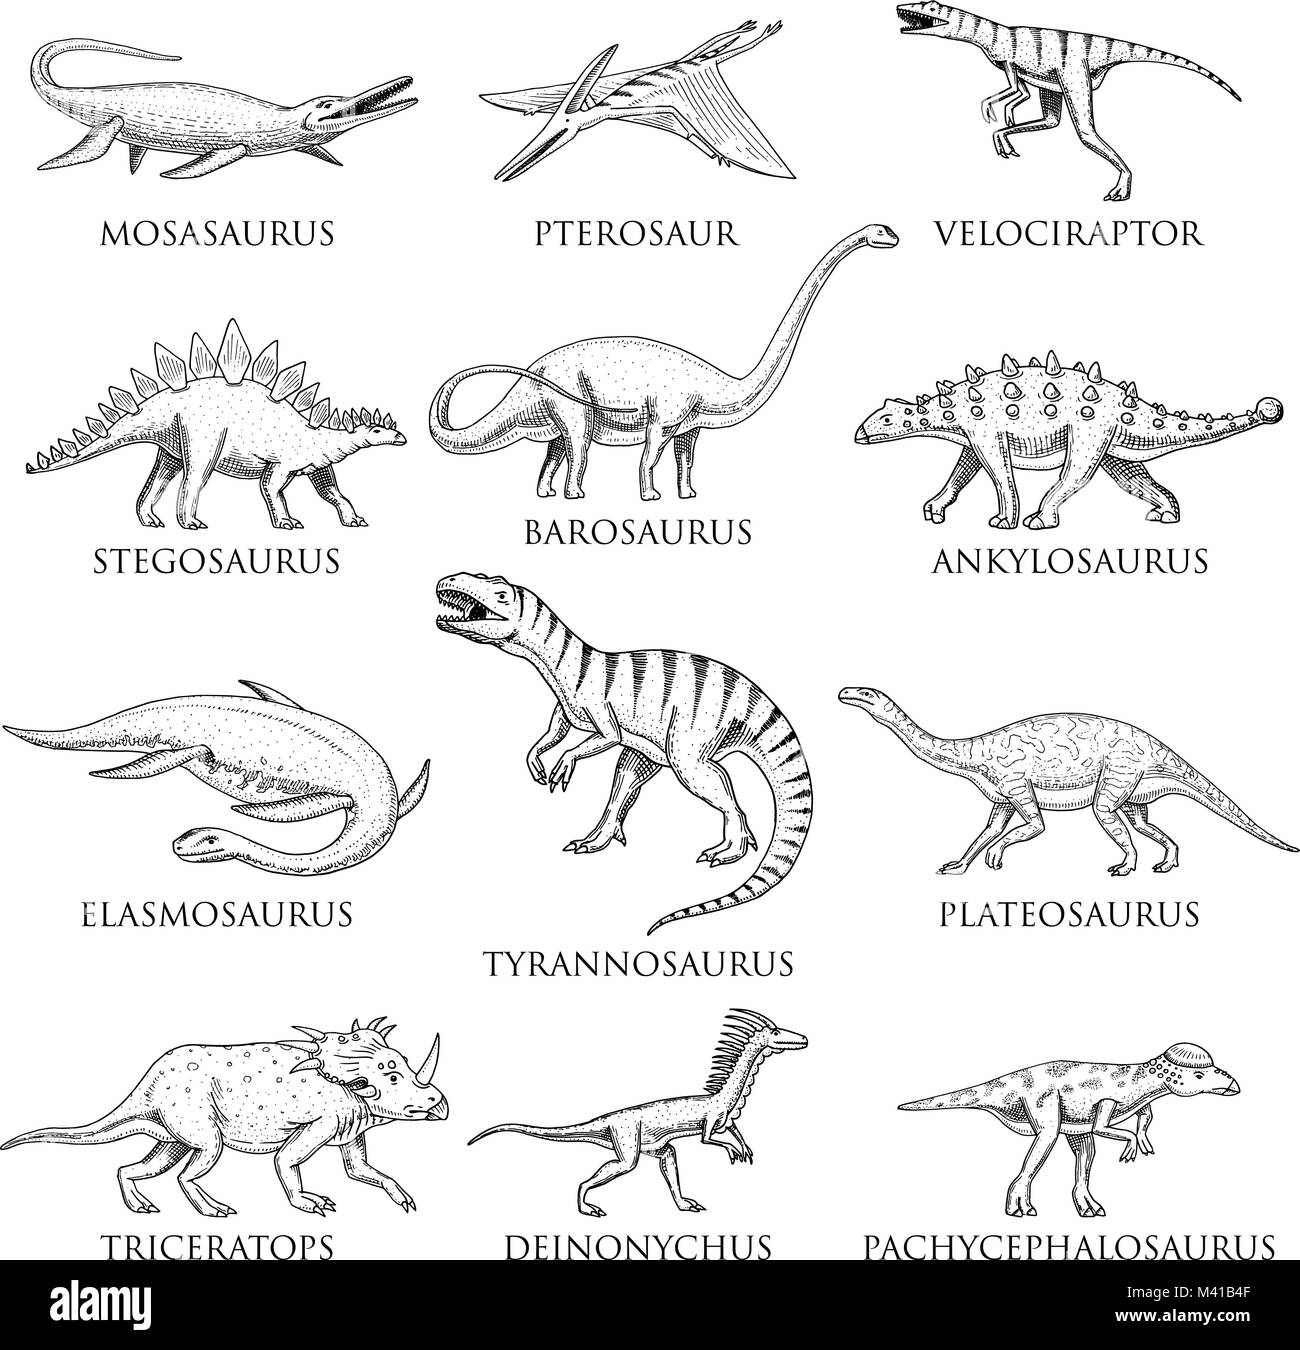 Dinosaurs set, Tyrannosaurus rex, Triceratops, Barosaurus, Diplodocus, Velociraptor, Triceratops, Stegosaurus, skeletons, fossils. Prehistoric reptiles, Animal Hand drawn vector. Stock Vector